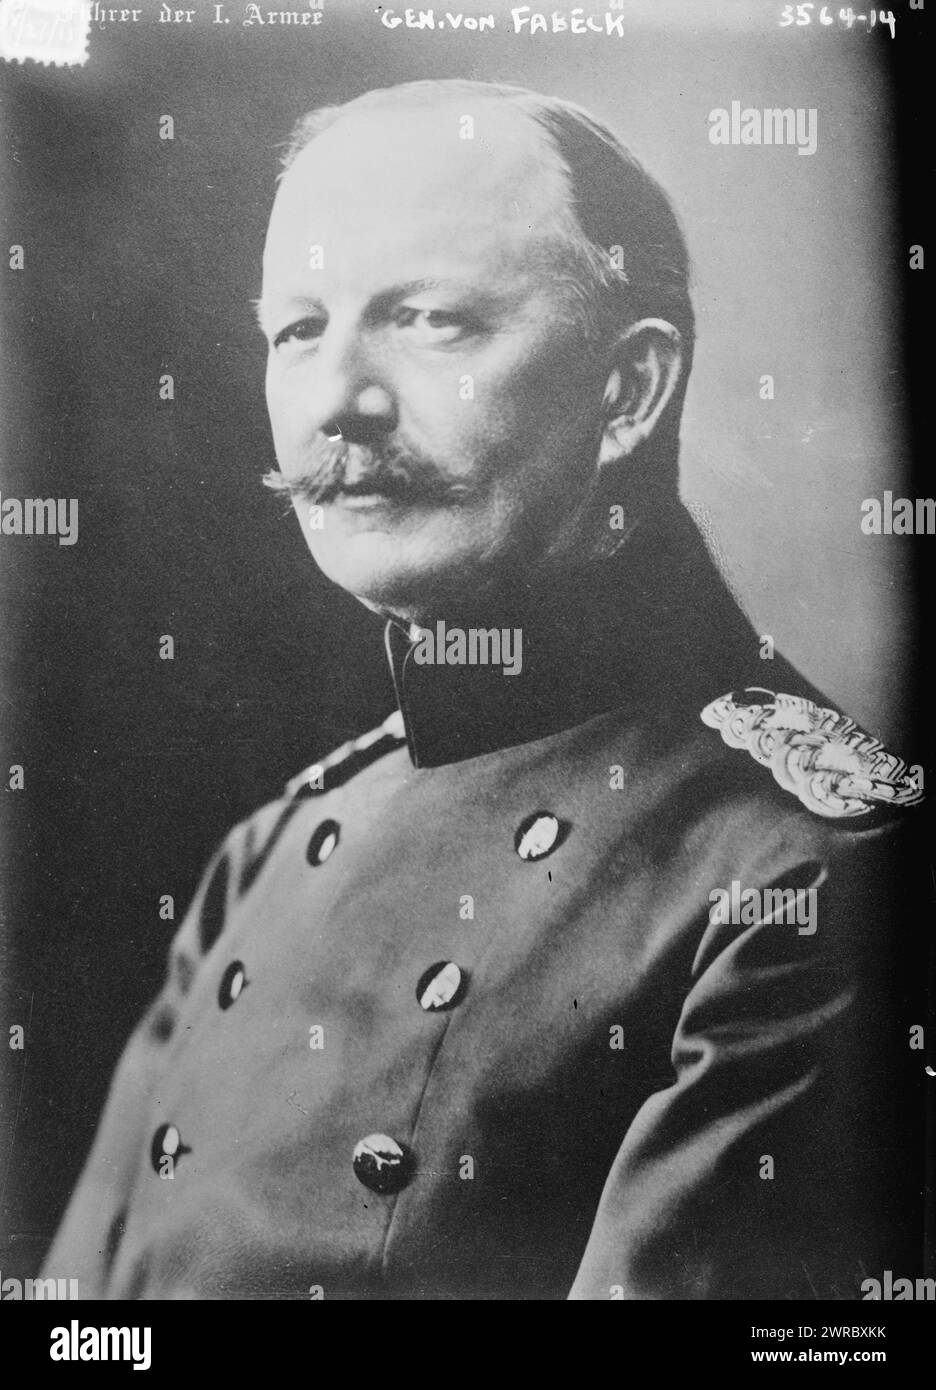 Gen. Von Fabeck, Photograph shows Herrmann Gustav Karl Max von Fabeck (1854-1916), who served as a German General during World War I., 1915 Aug. 27, Glass negatives, 1 negative: glass Stock Photo